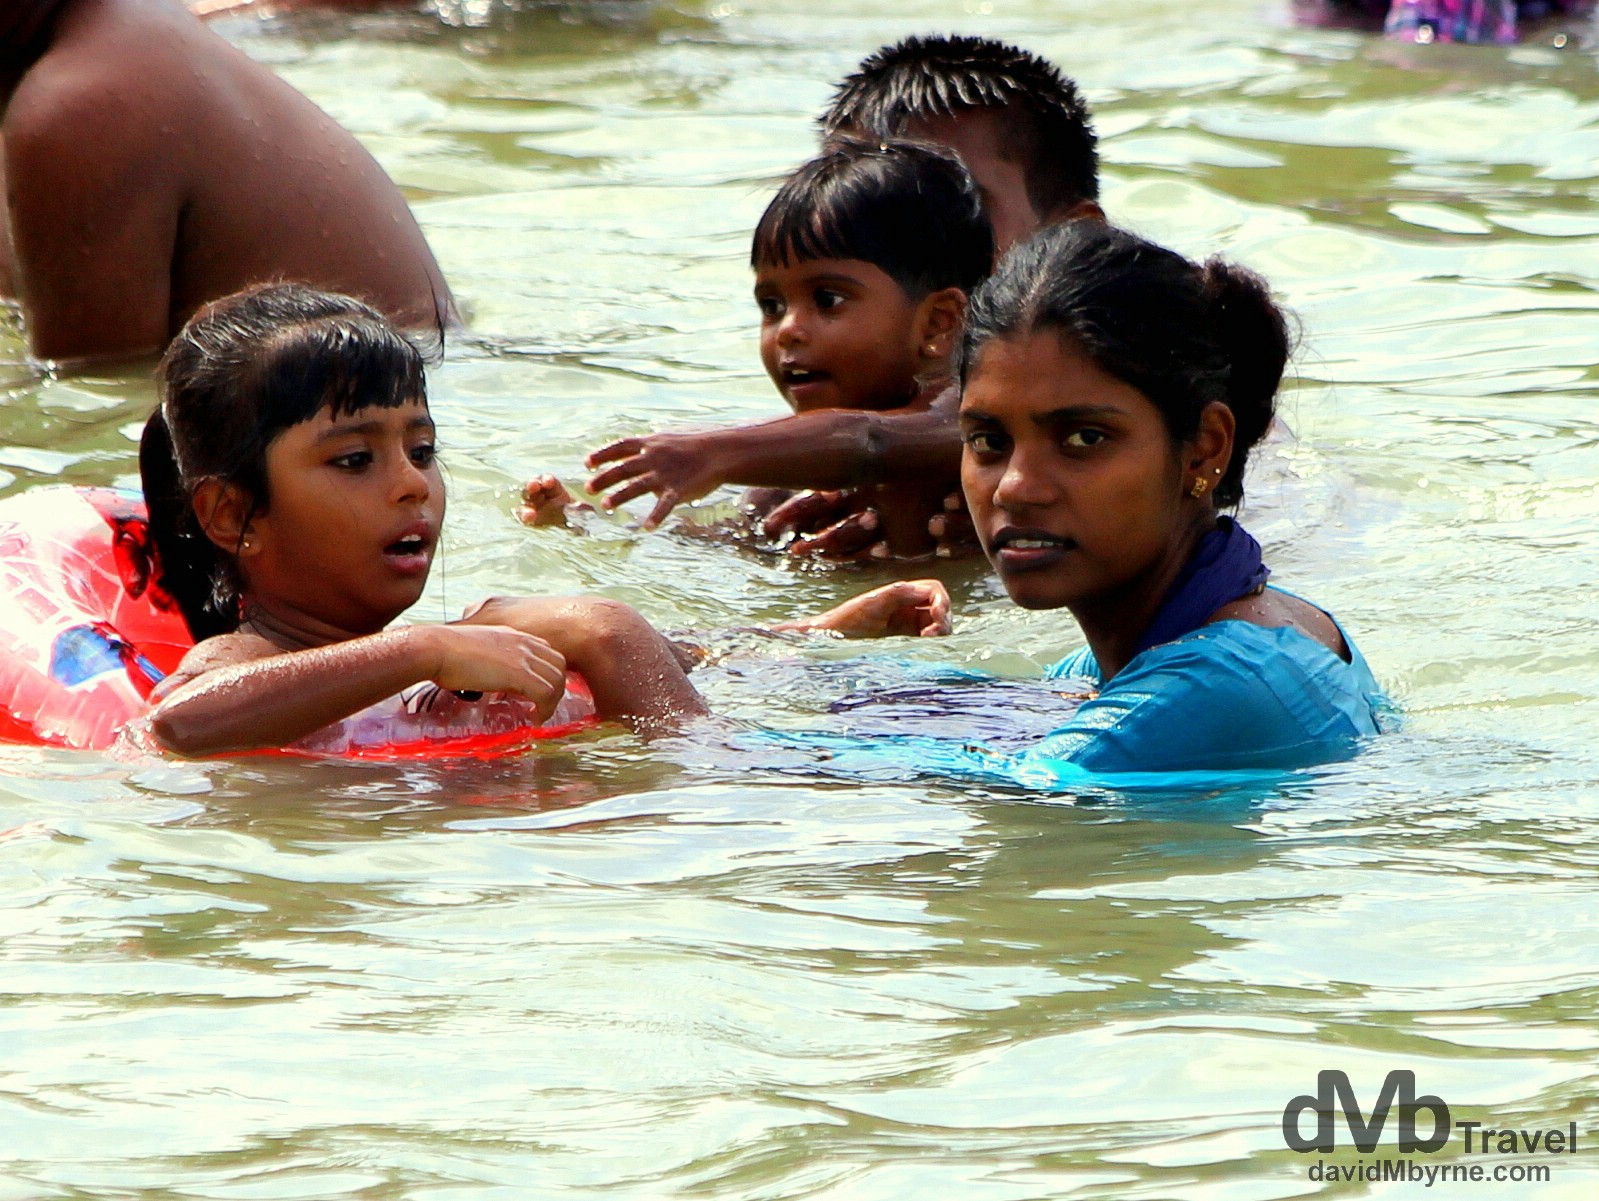 In the waters of Unawatuna beach, Southern Sri Lanka. September 1st 2012.